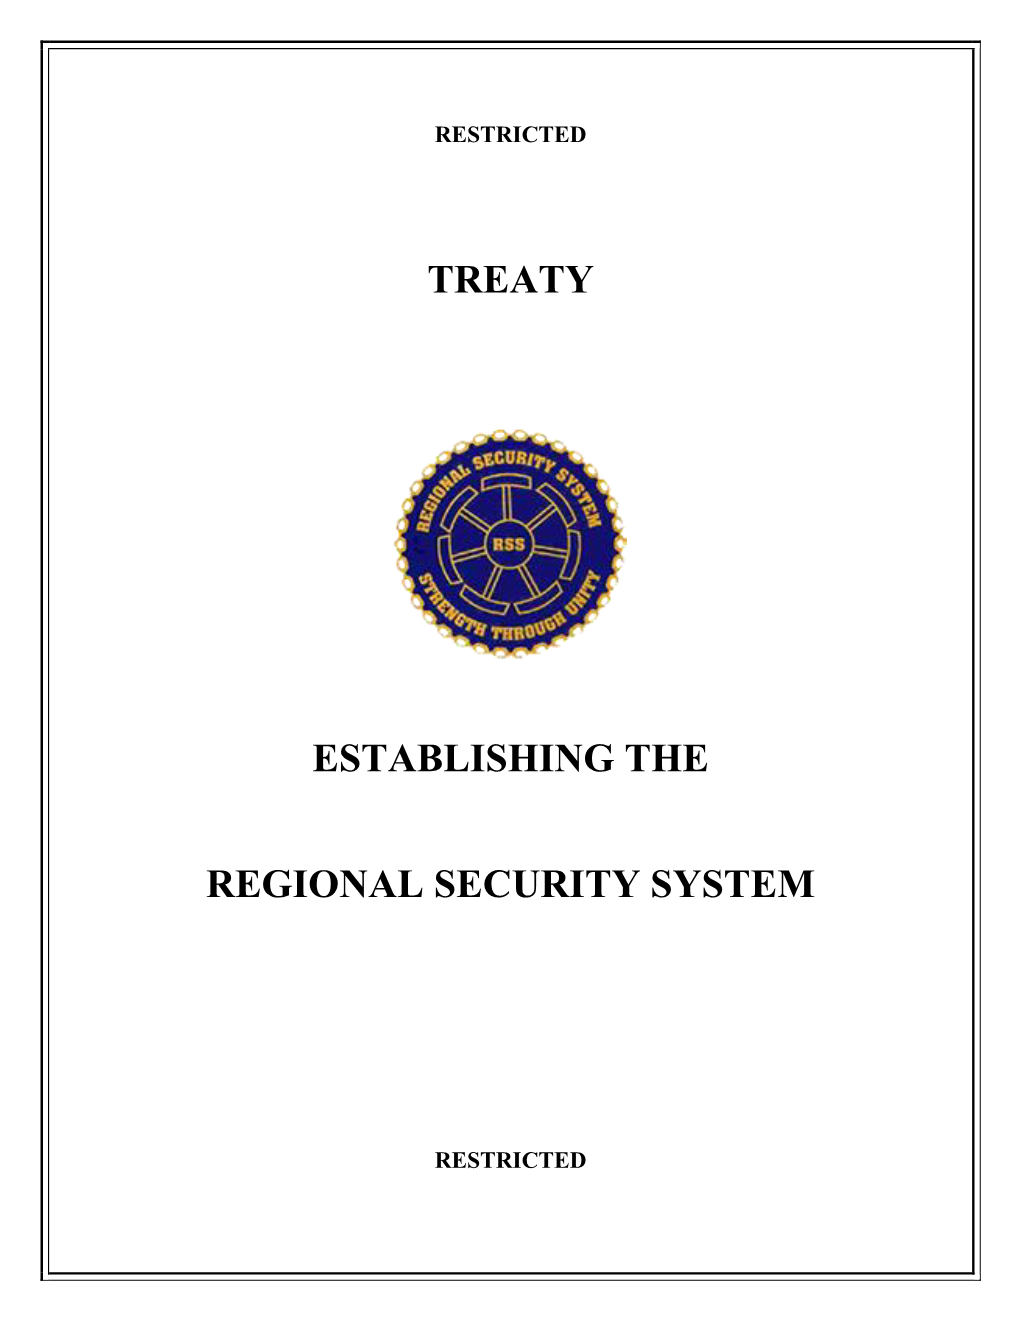 Treaty Establishing the Regional Security System